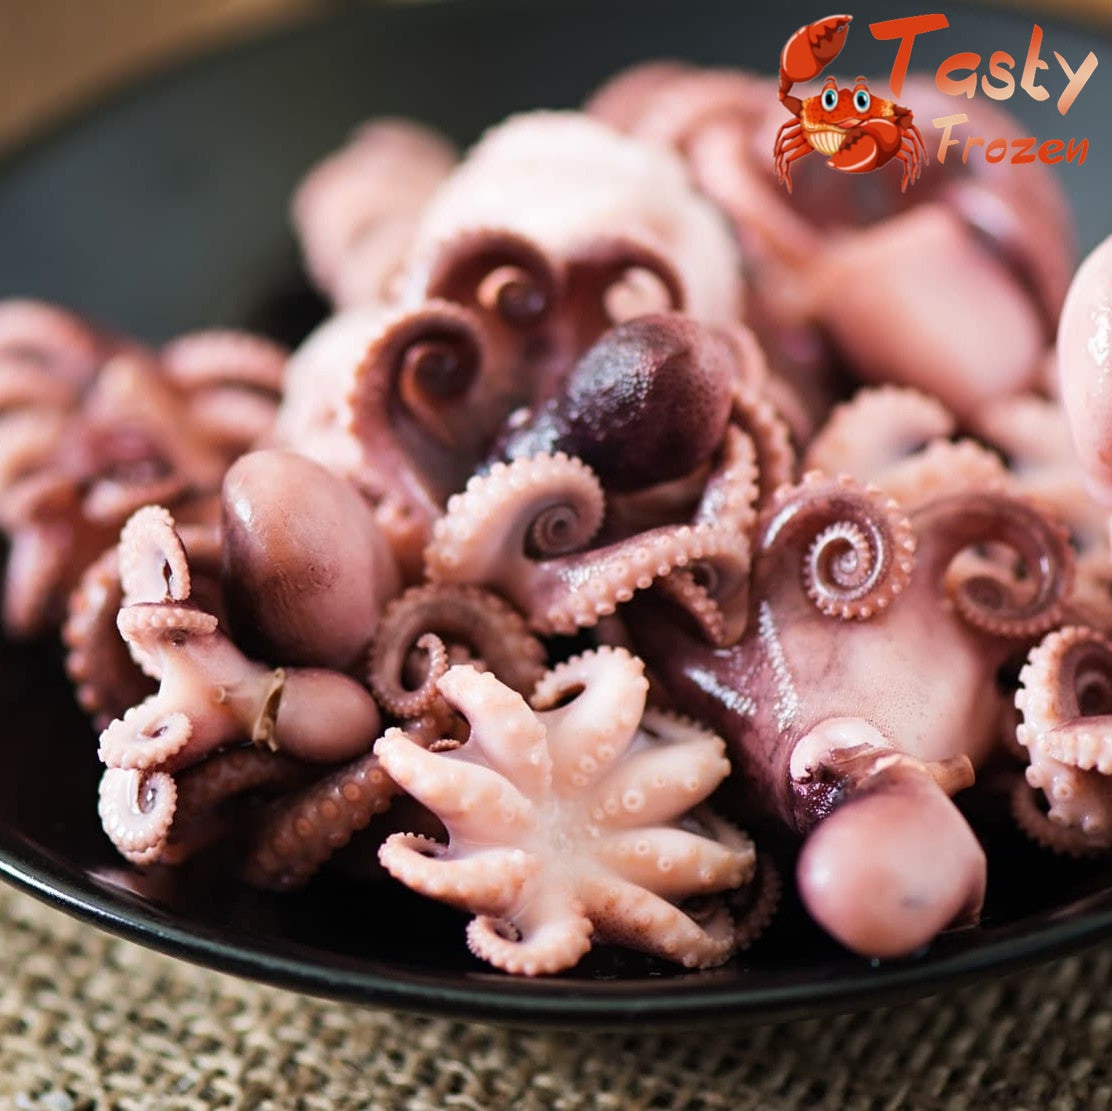 Baby Octopus 小八爪鱼 250g